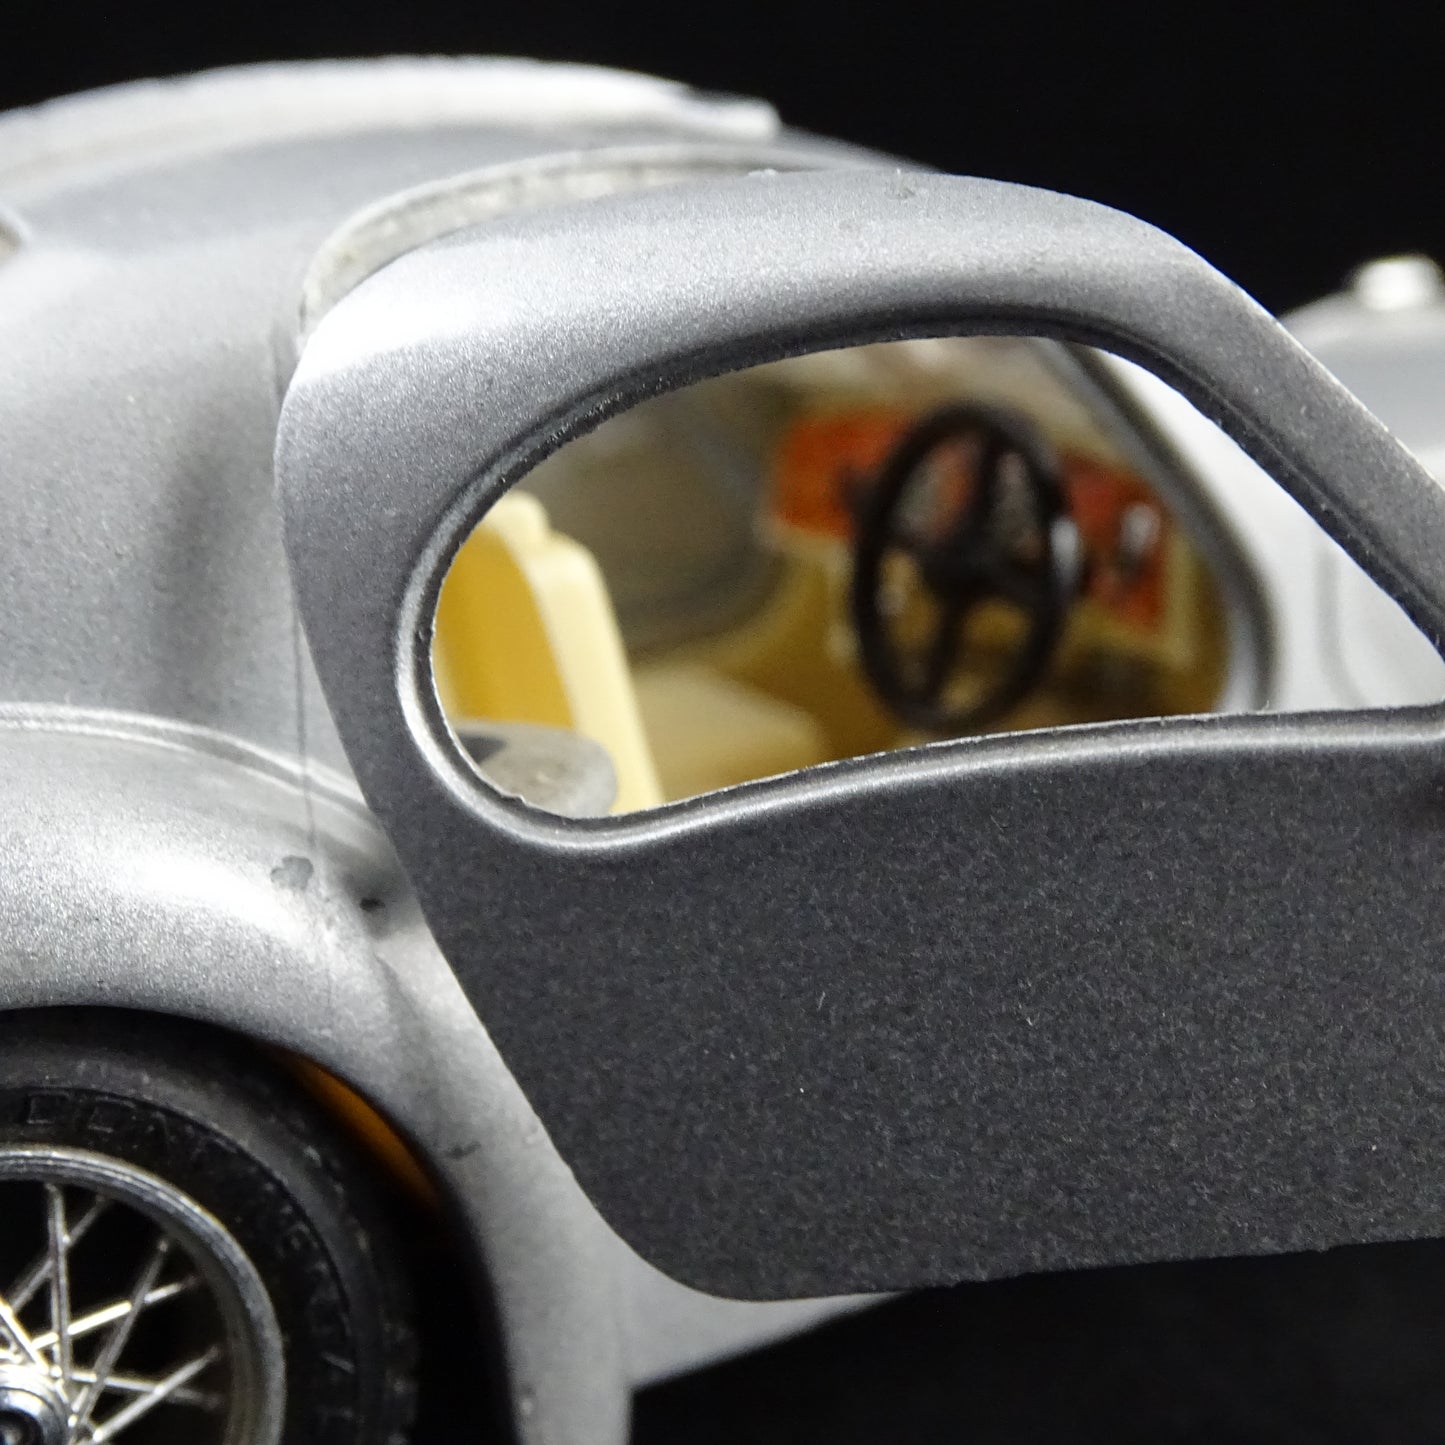 Voiture miniature de collection Bugatti d'occasion - BURAGO